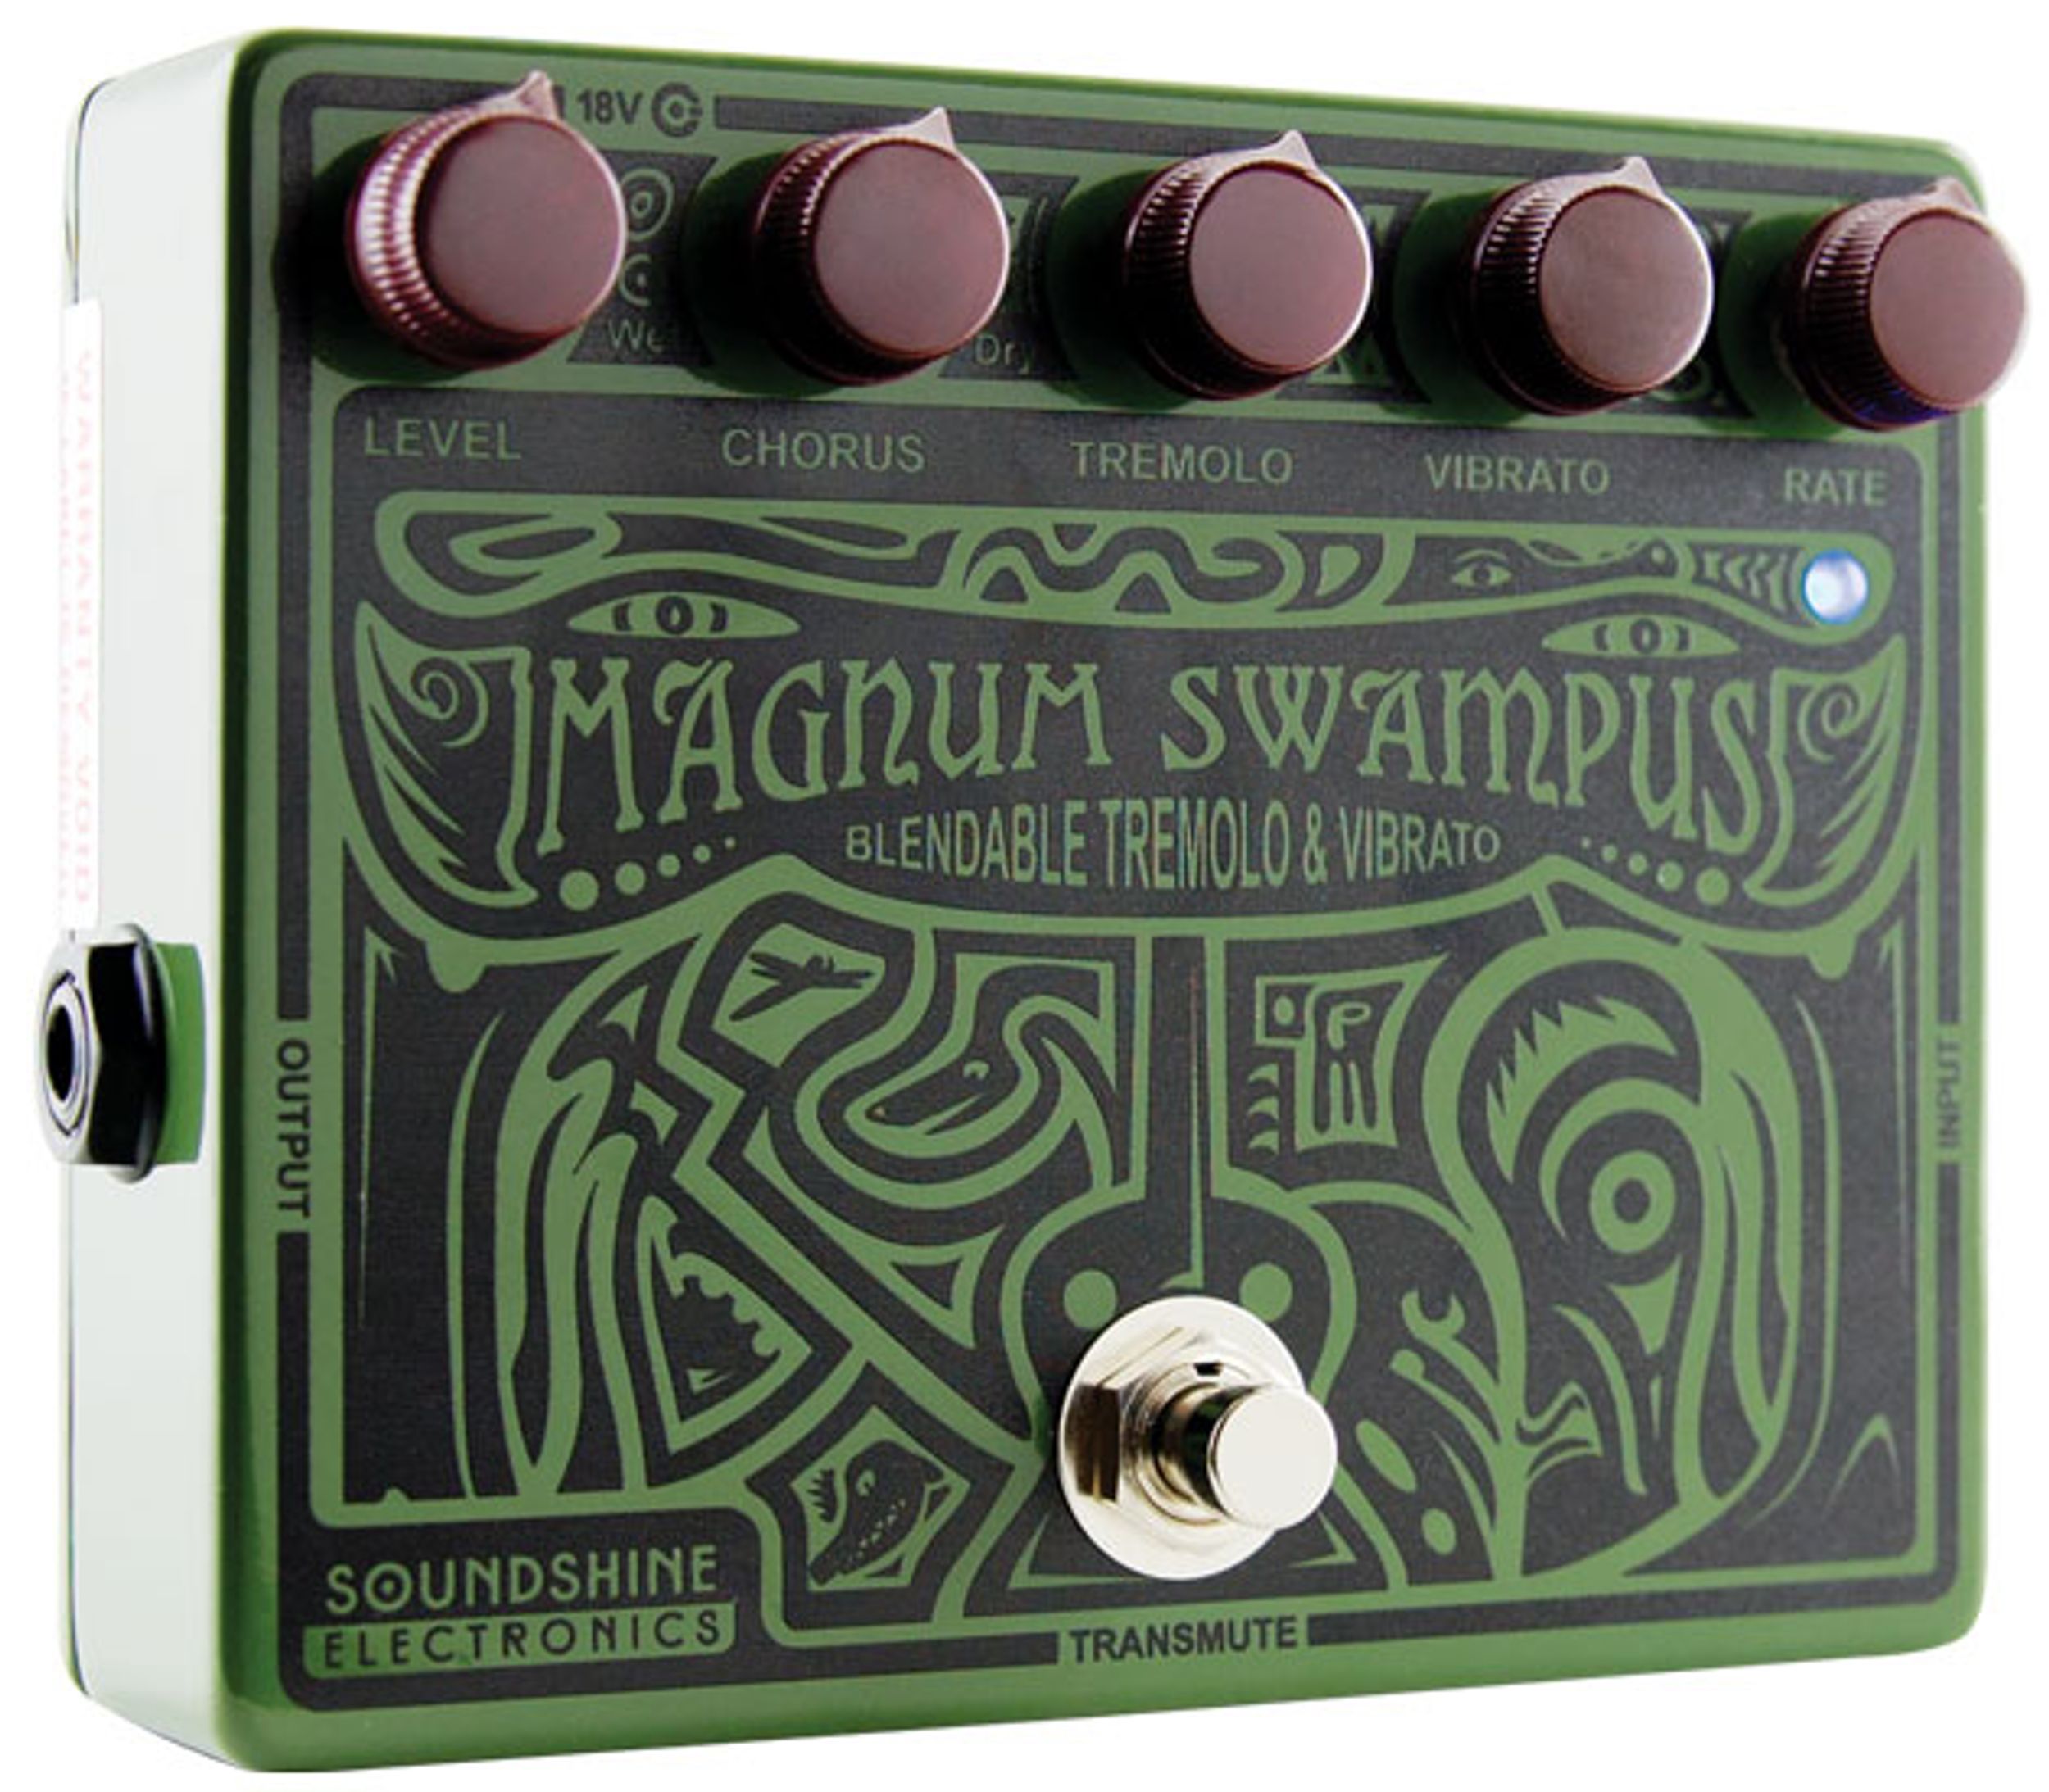 Soundshine Electronics Magnum Swampus Review